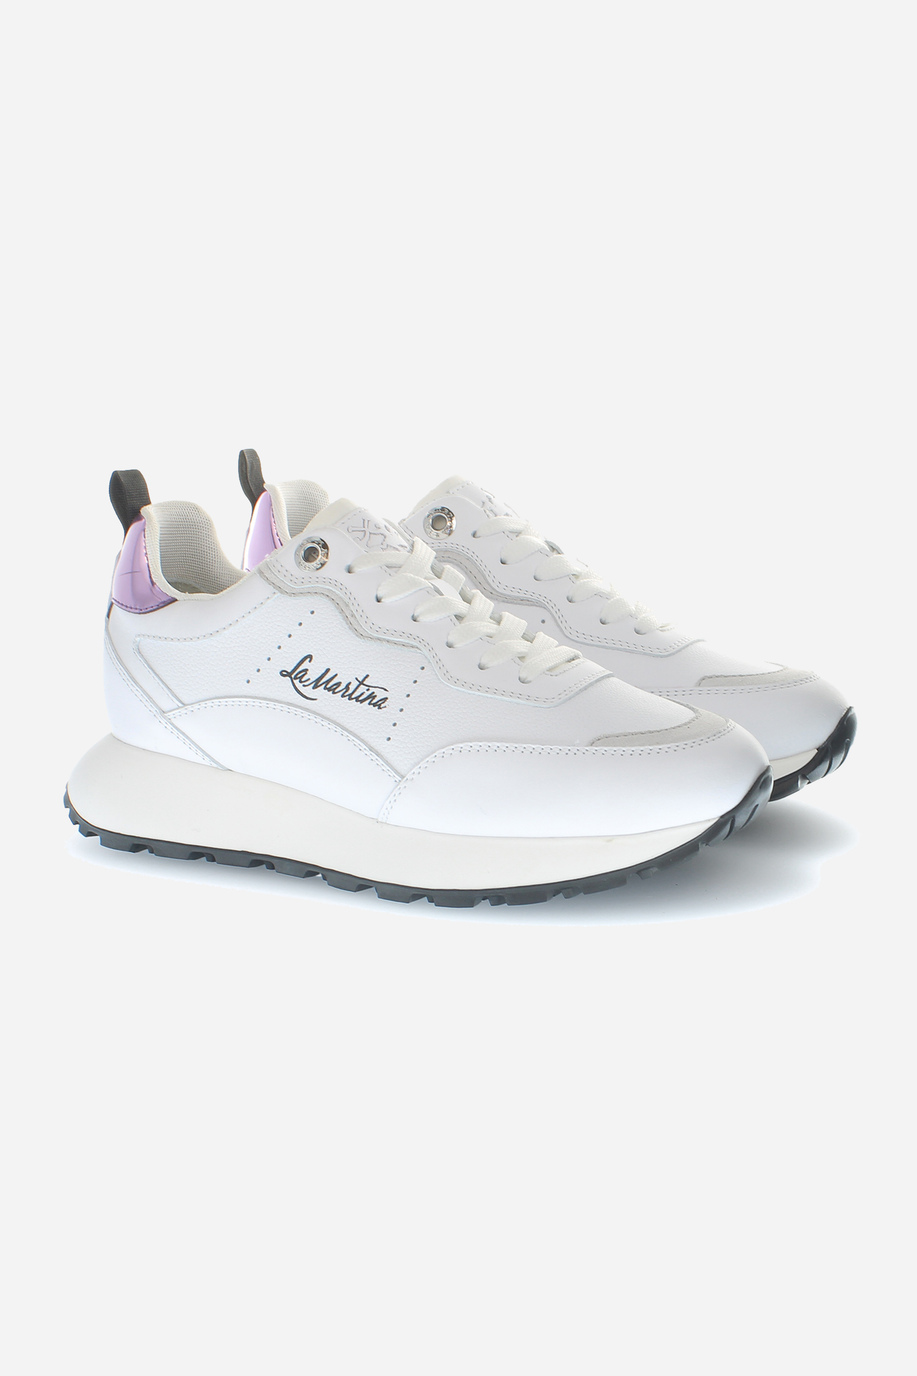 Leder-Sneaker - Easy wear Frauen | La Martina - Official Online Shop